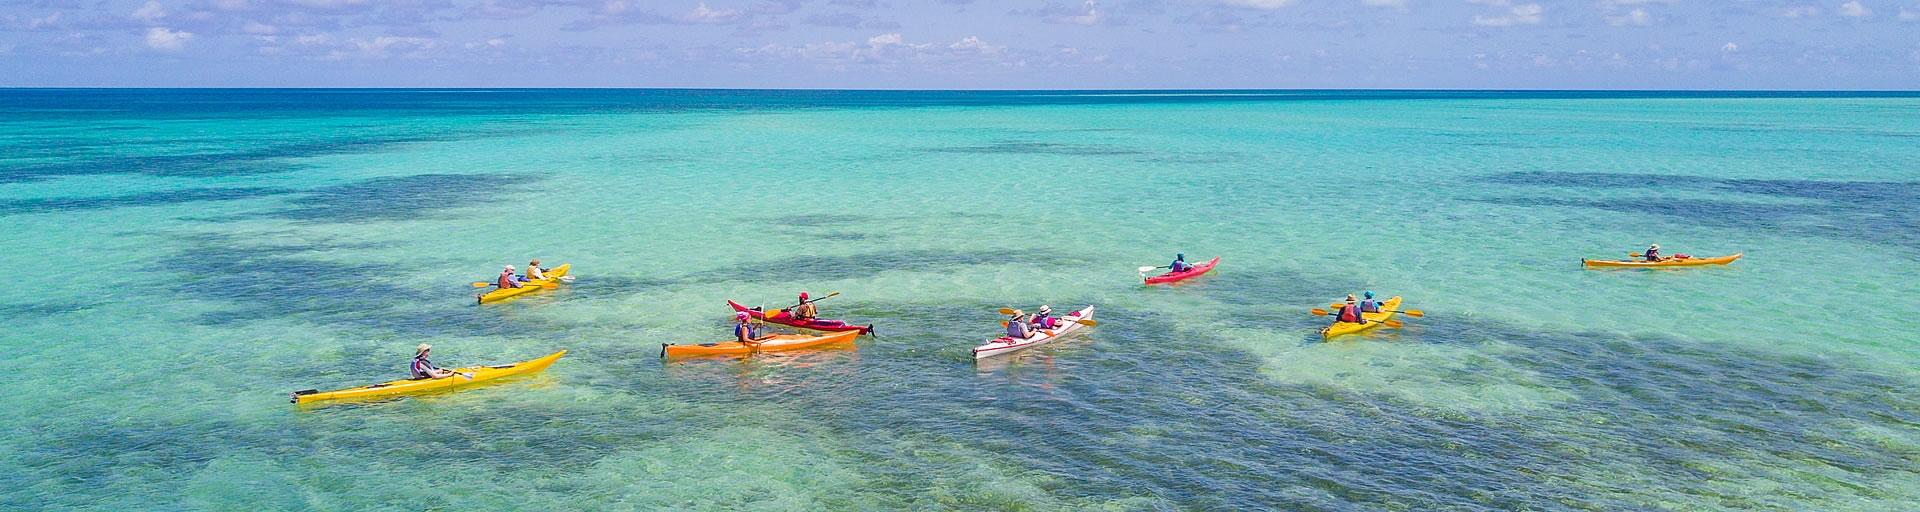 Sea Kayaking in Belize